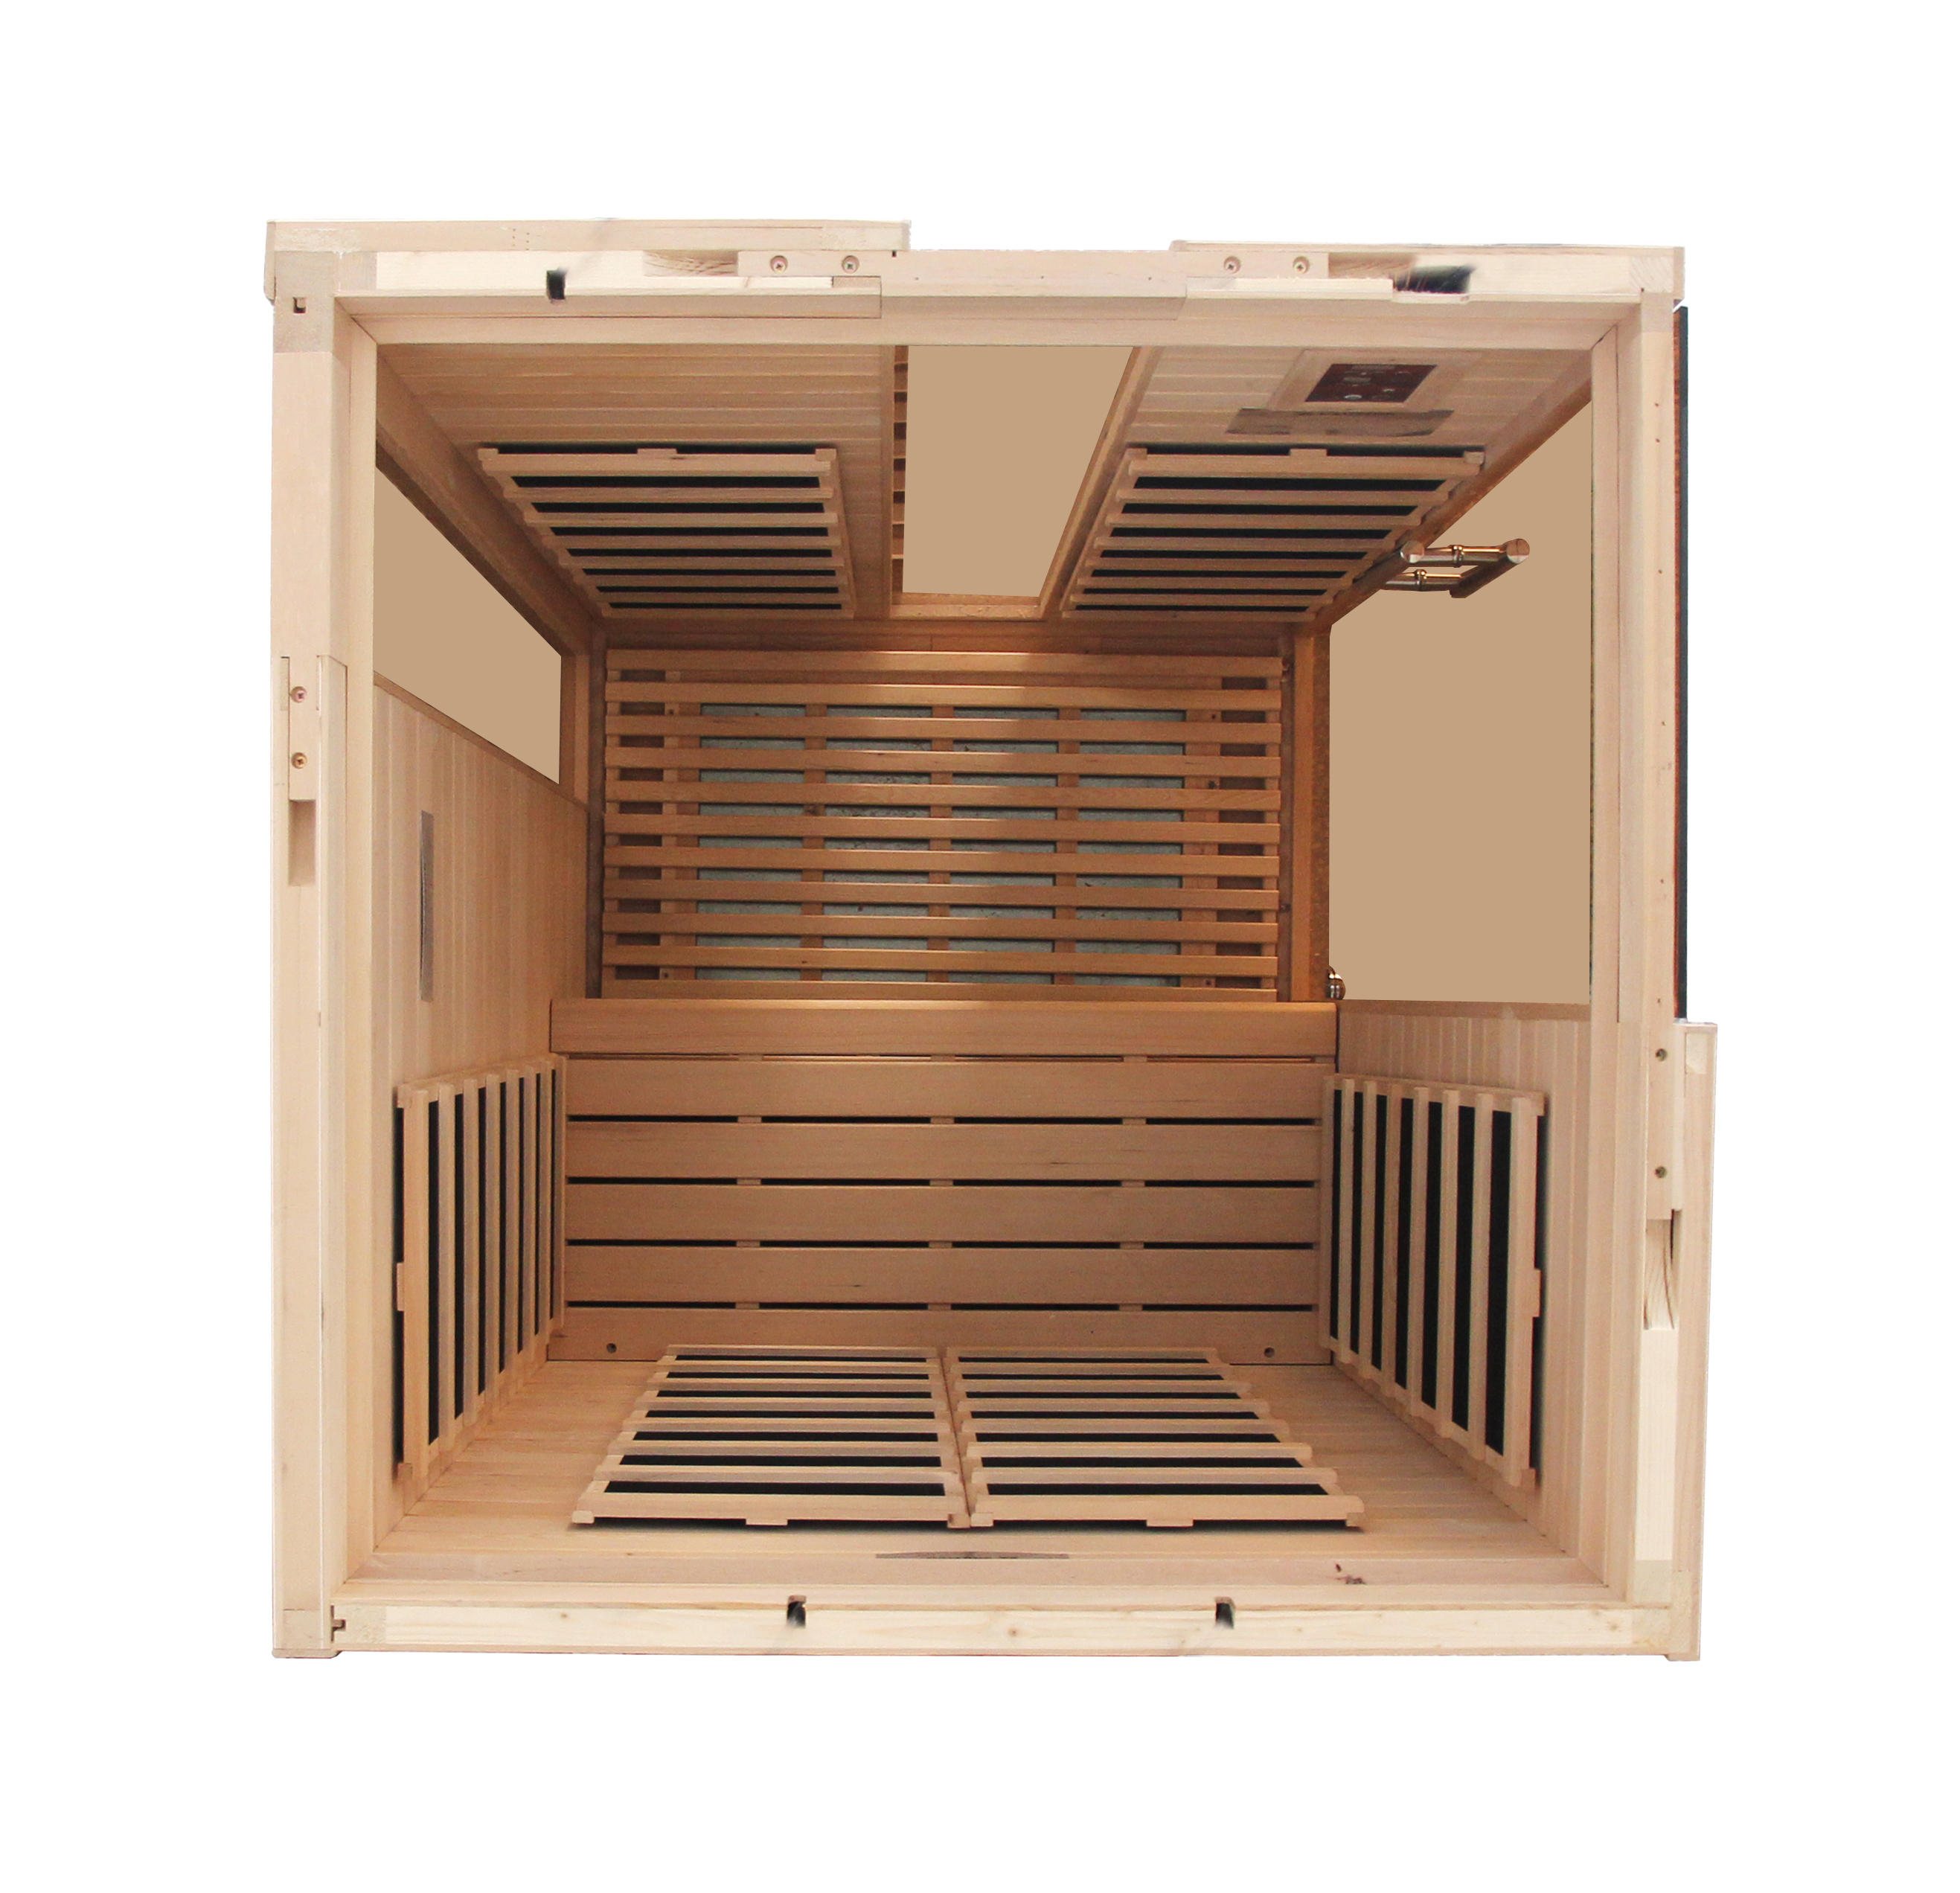 Oslo Infrared Sauna Dual Heating System & Hemlock Wood ArtSauna Infrared Sauna for 2 People 